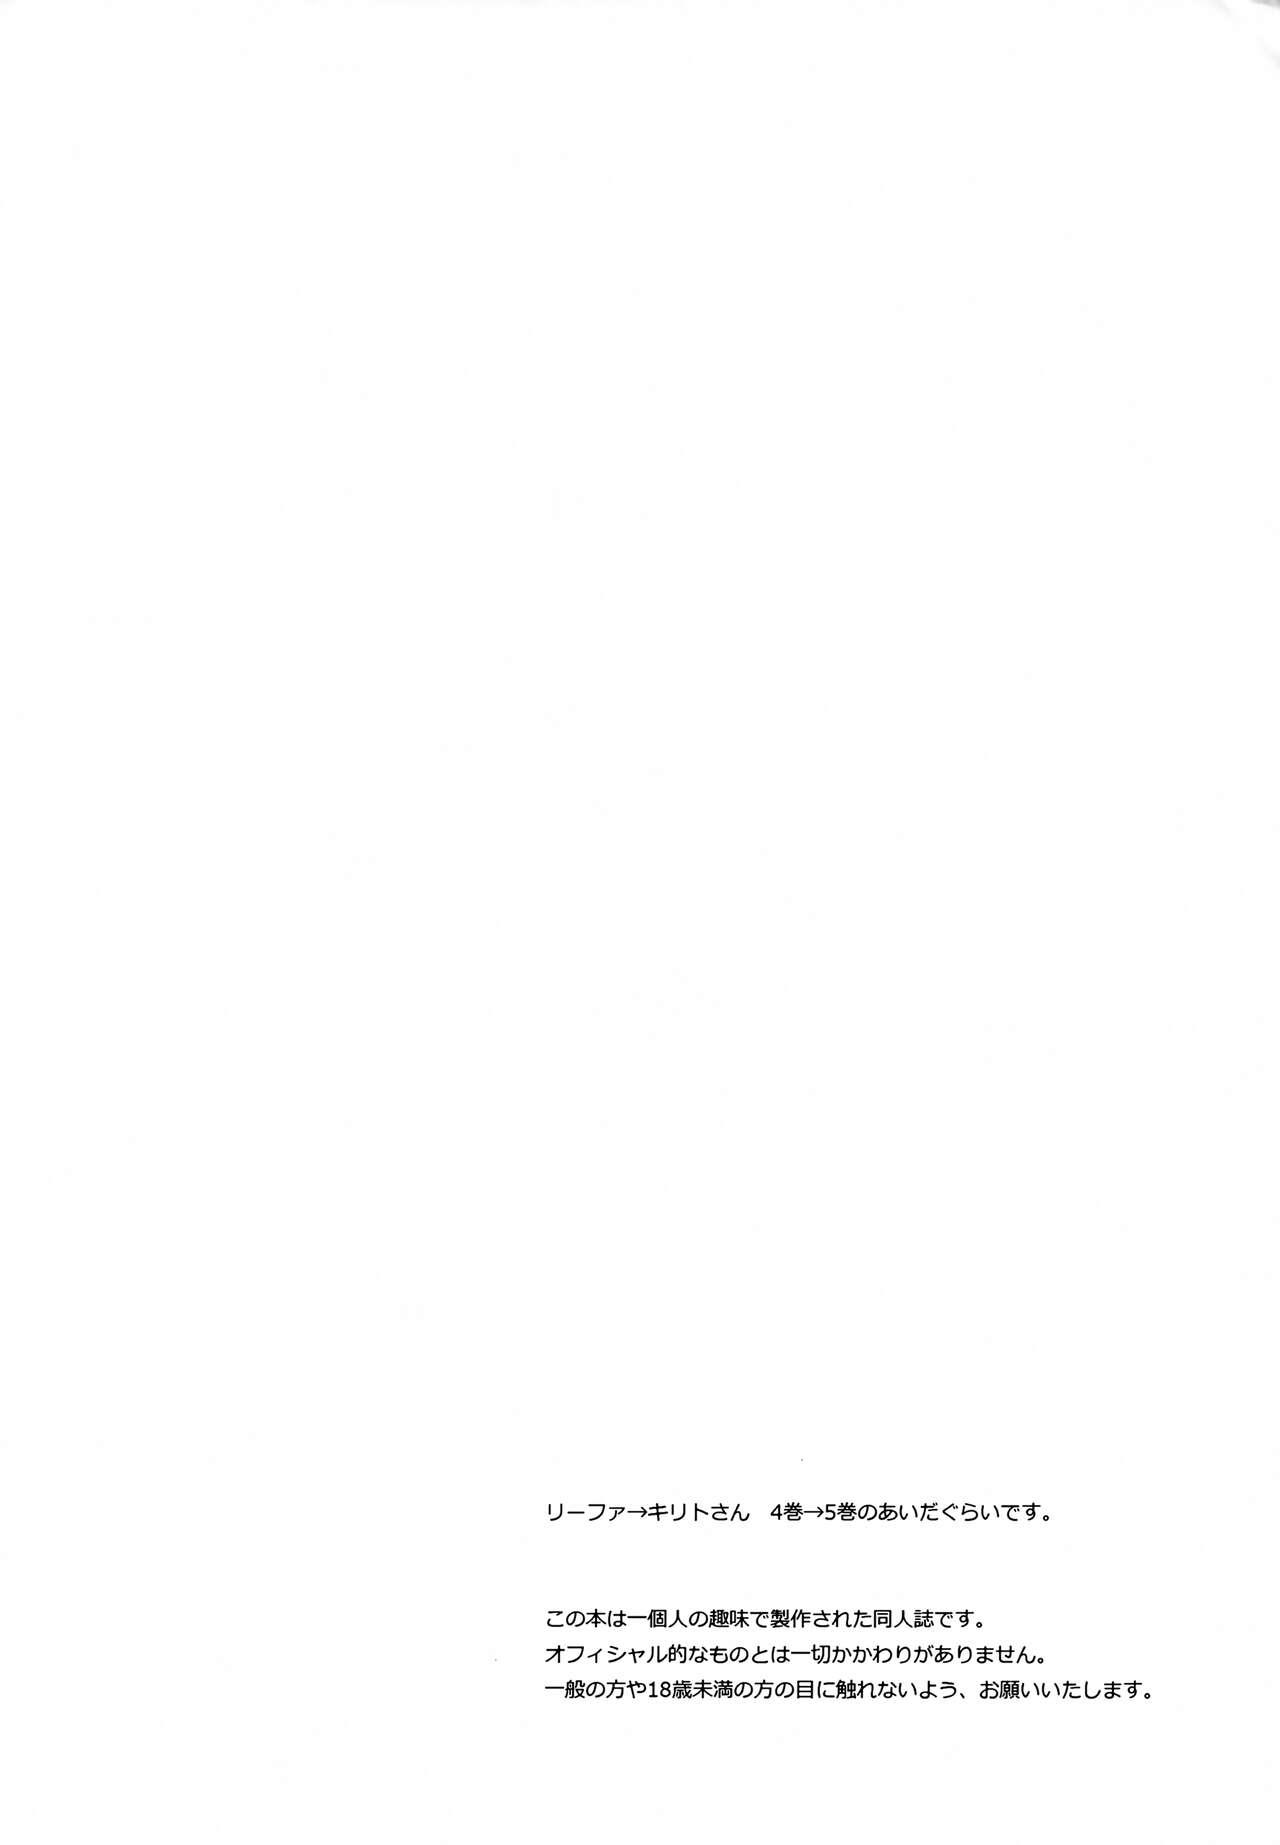 Mallu Fairy Tail - Sword art online People Having Sex - Picture 3